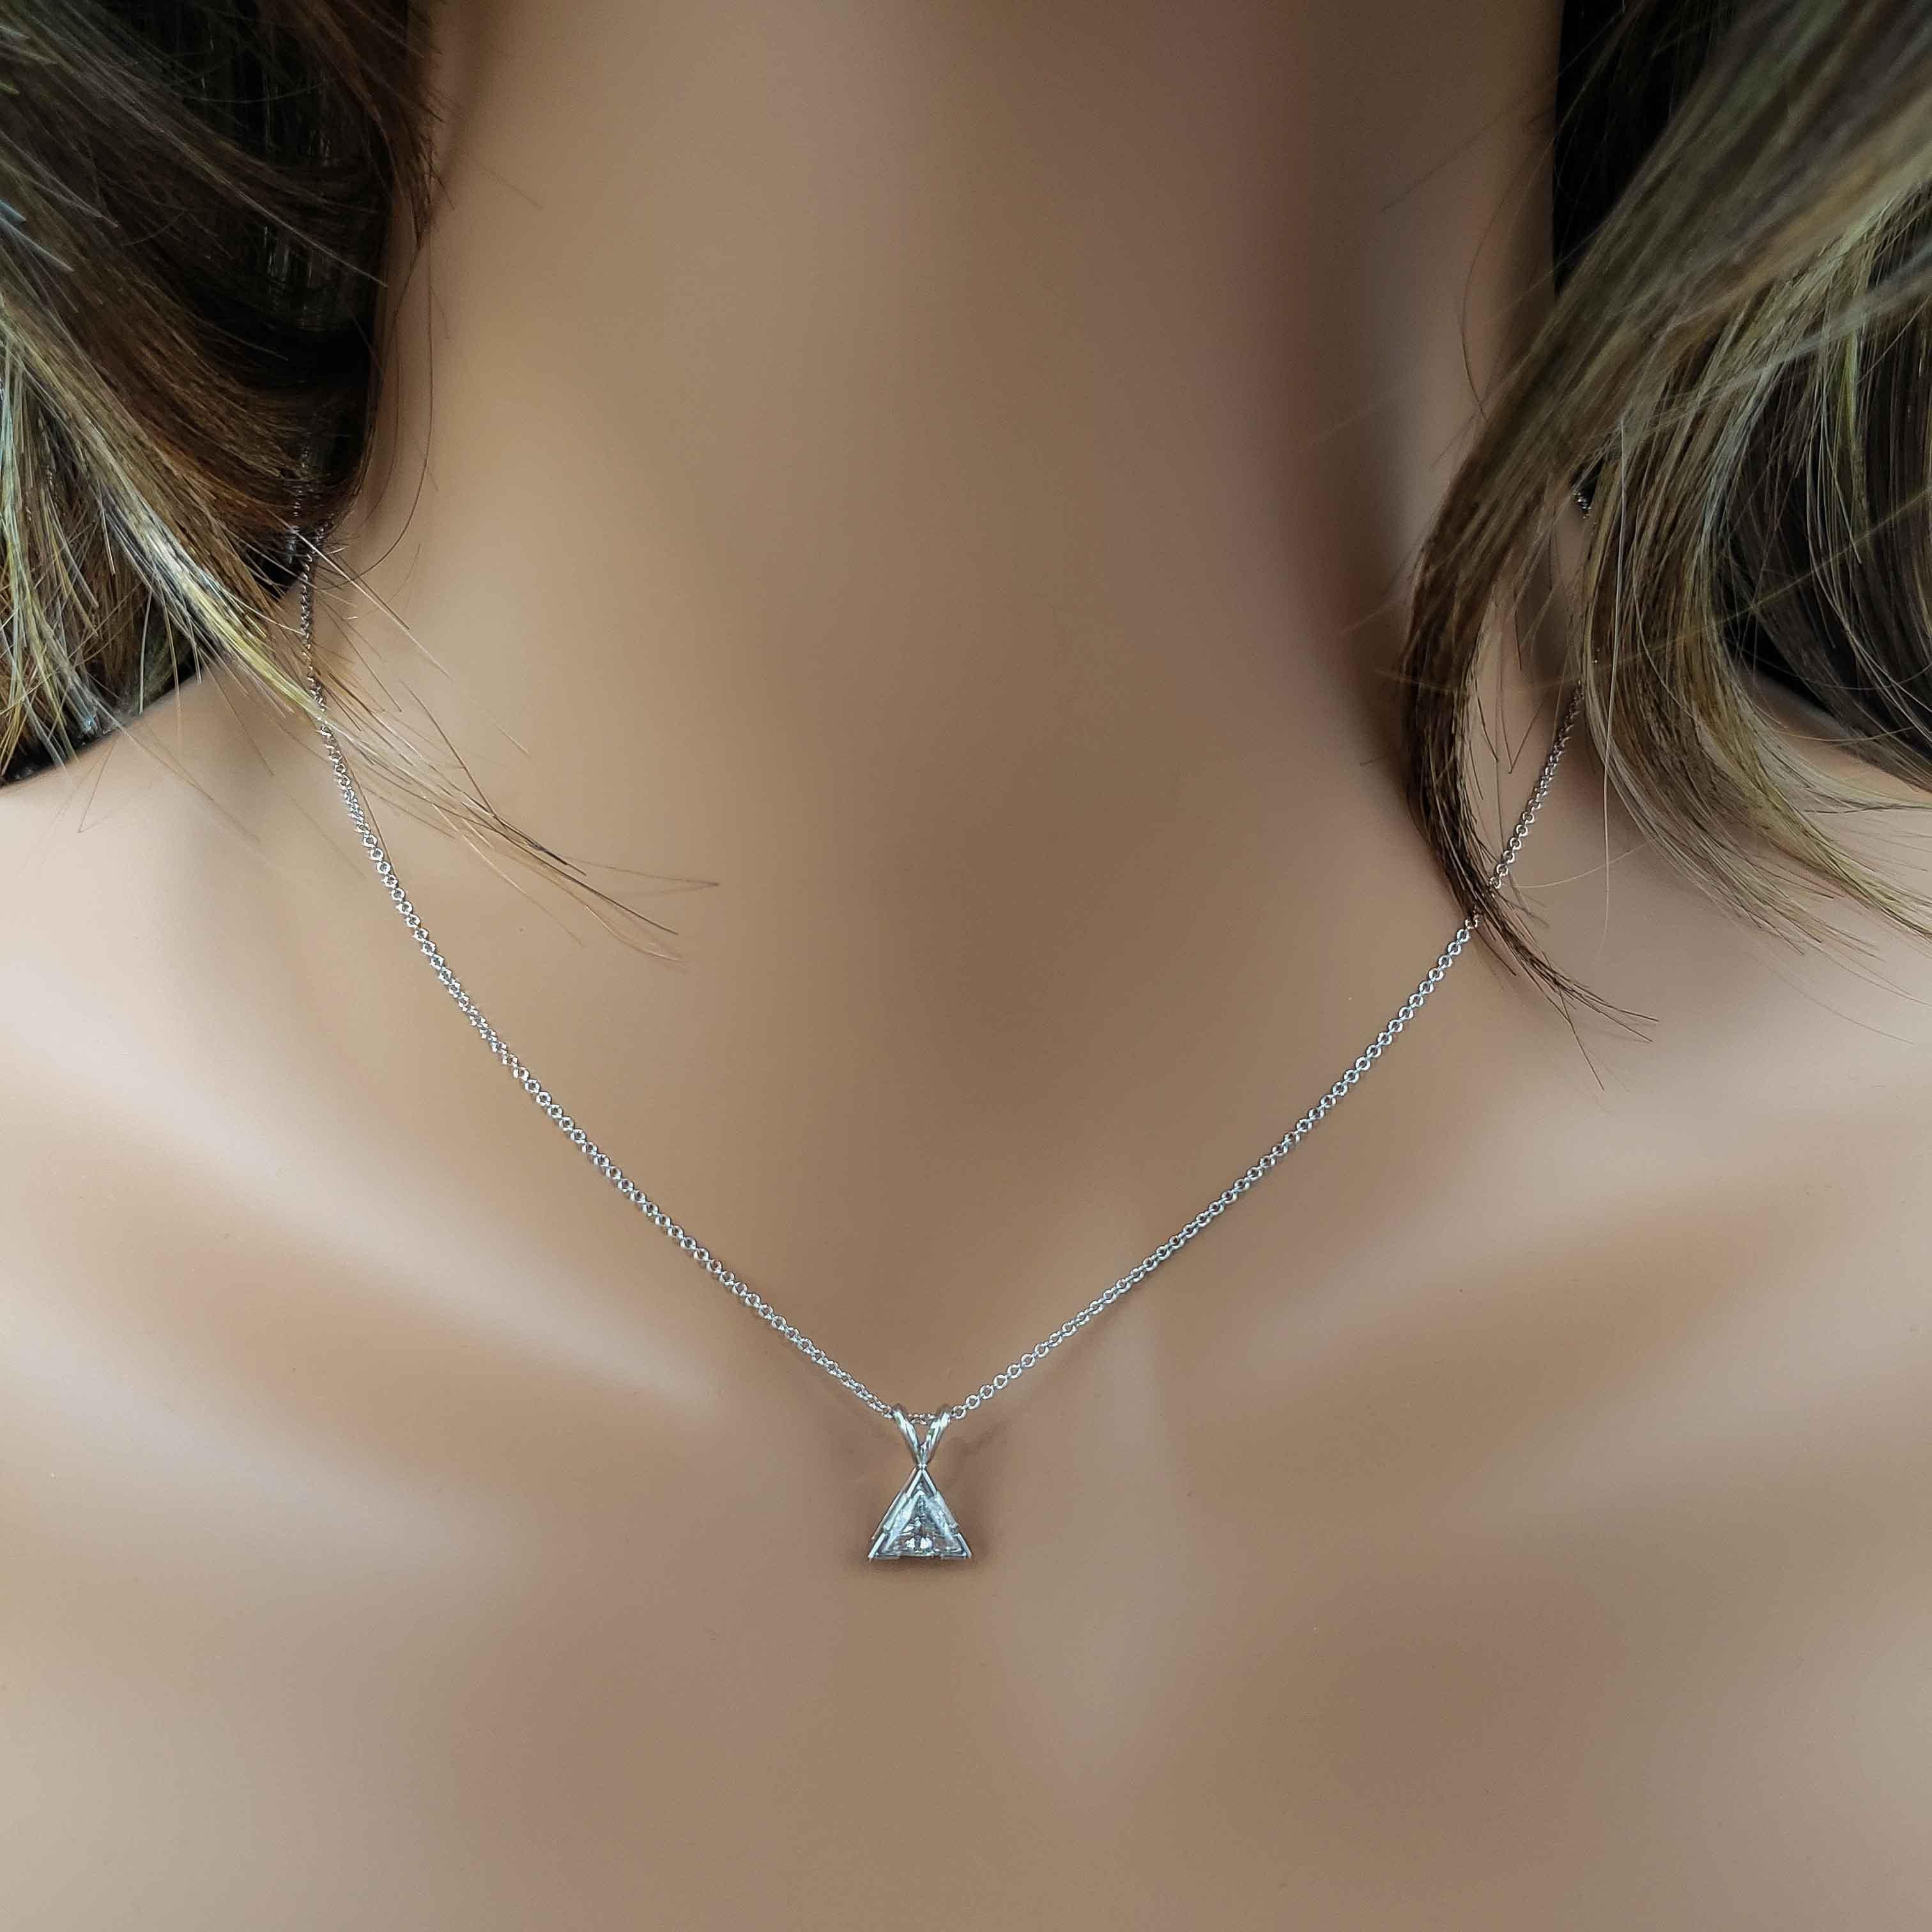 Roman Malakov 0.51 Carats Trillion Cut Diamond Solitaire Pendant Necklace In New Condition For Sale In New York, NY